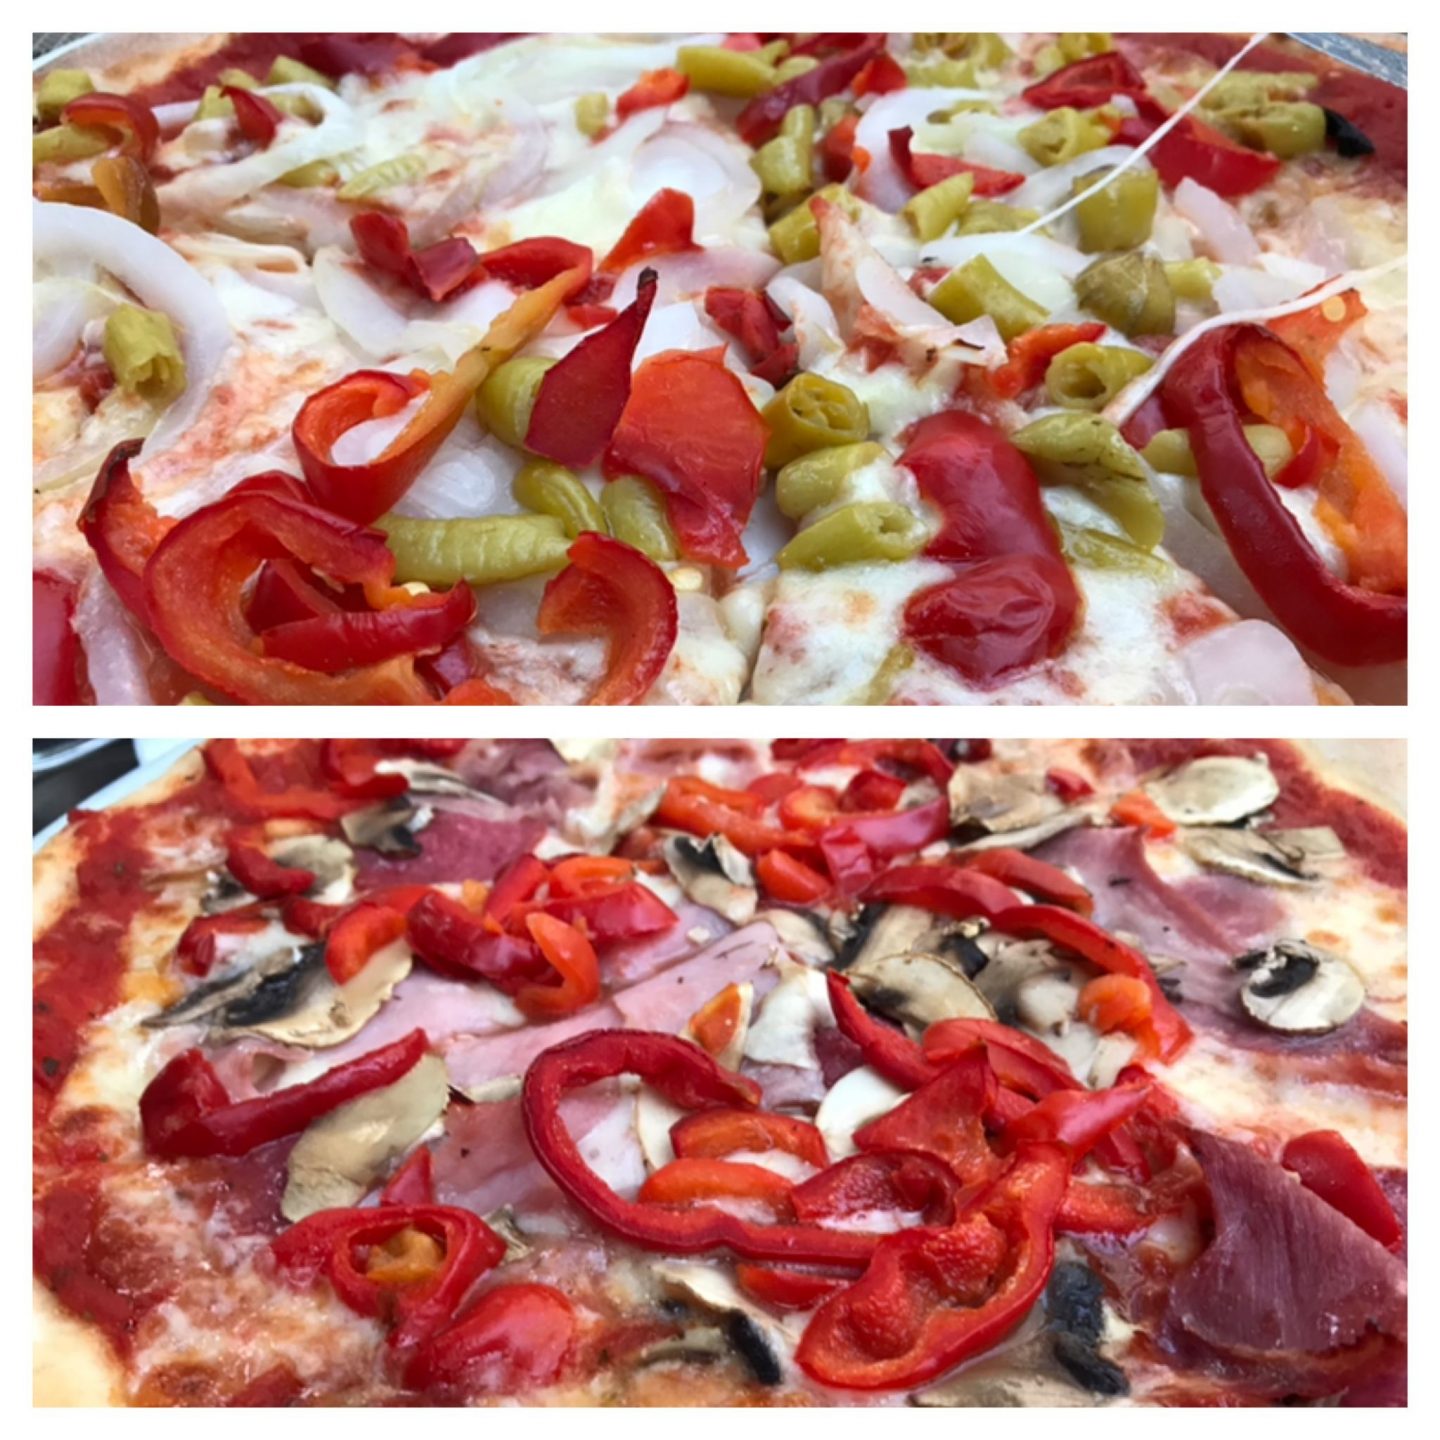 Erfahrung Bewertung Kritik Pizza Ristorante Michelangelo Bad Hersfeld Foodblog Sternestulle